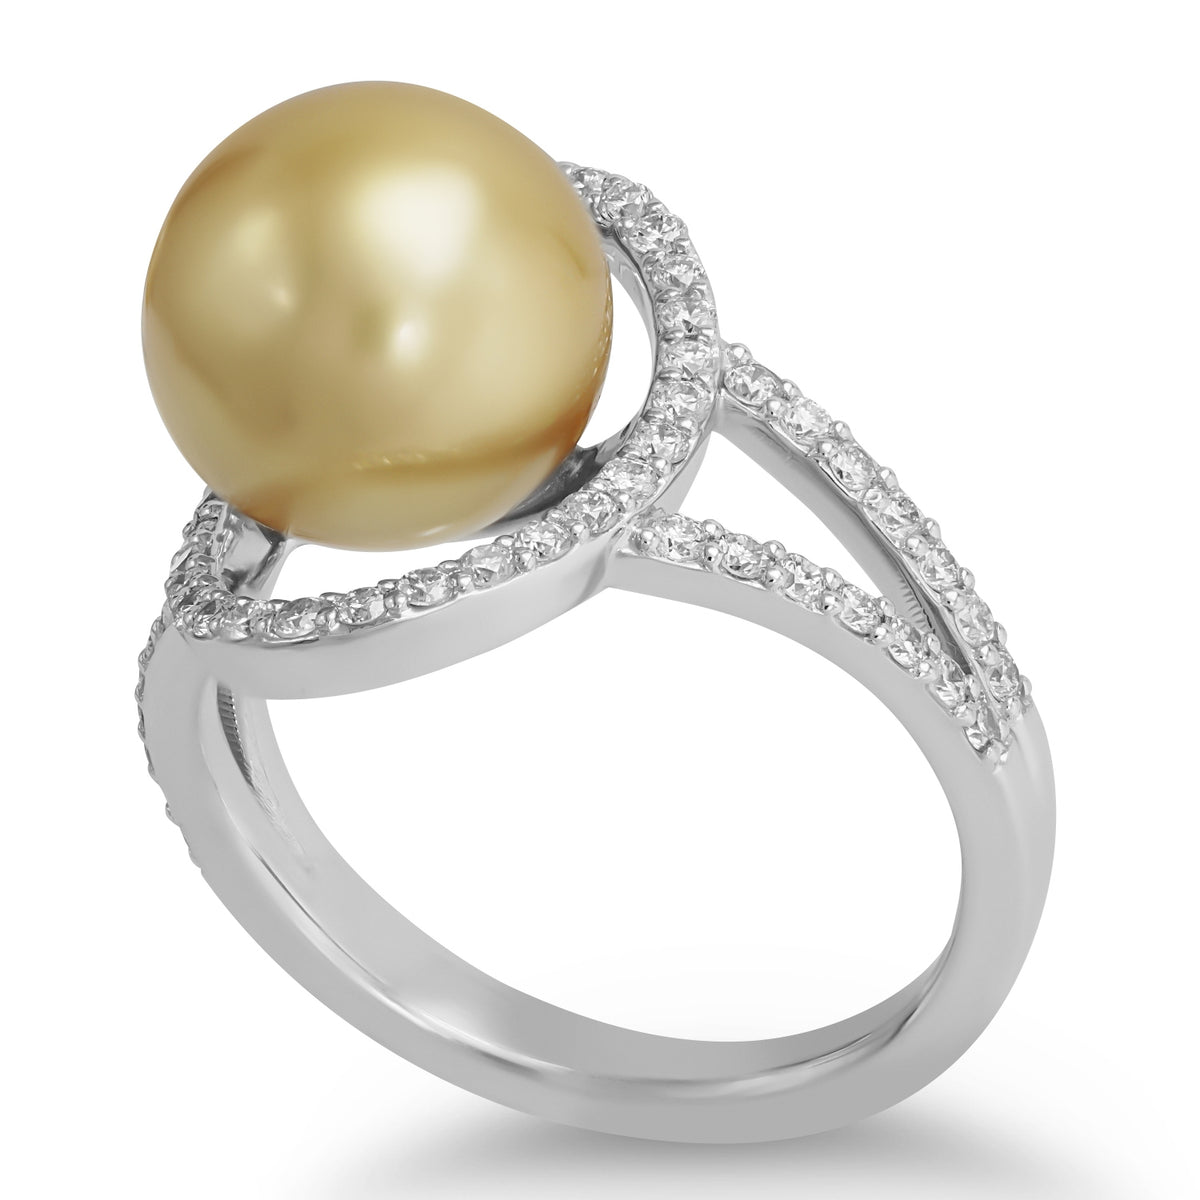 Haloed Golden Pearl Ring